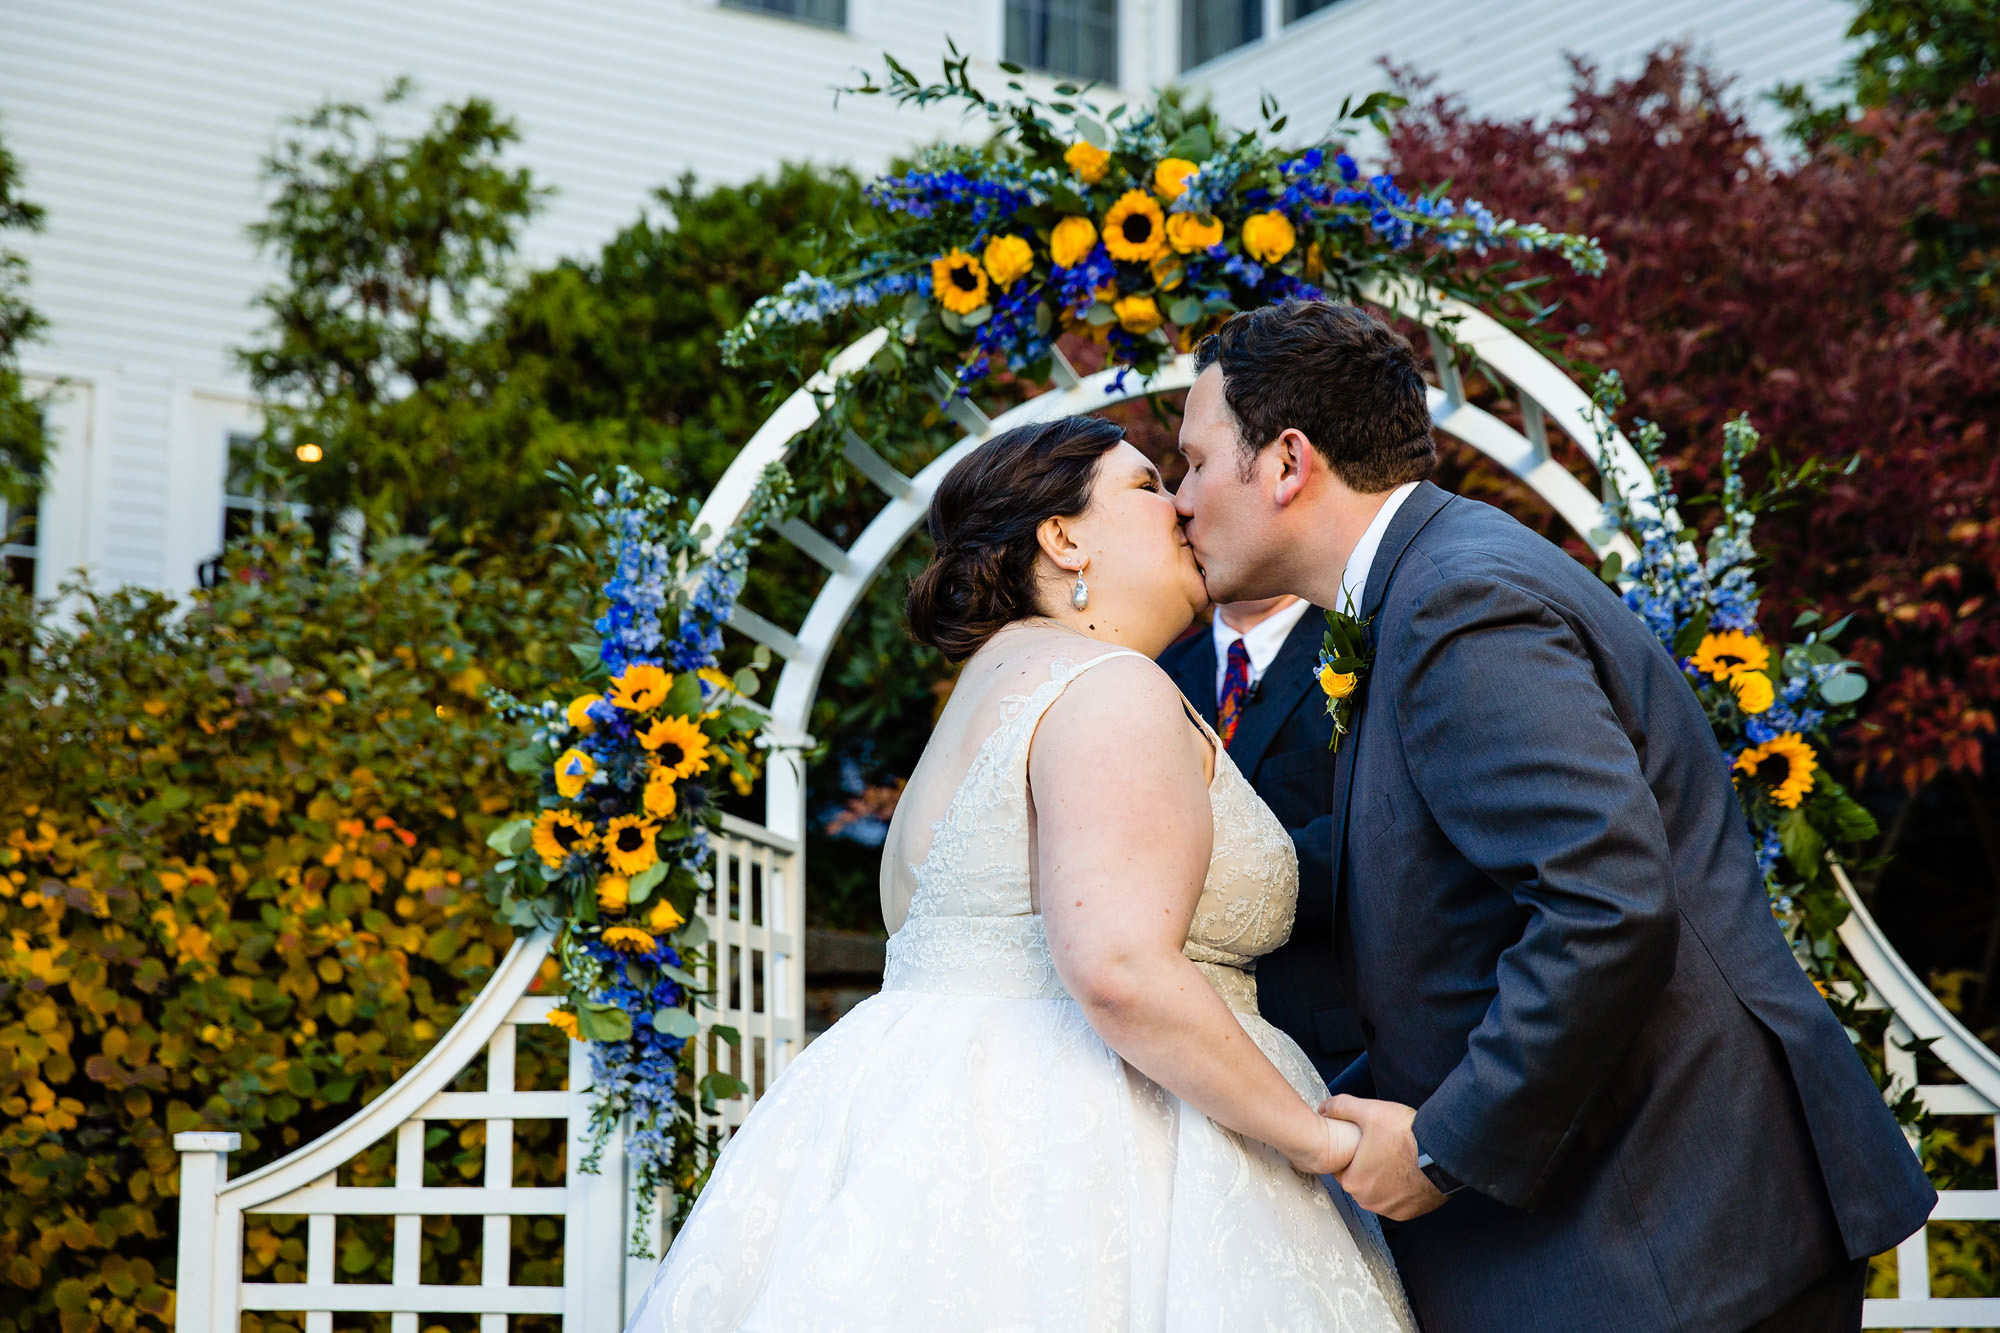 A beautiful wedding ceremony in Freeport Maine